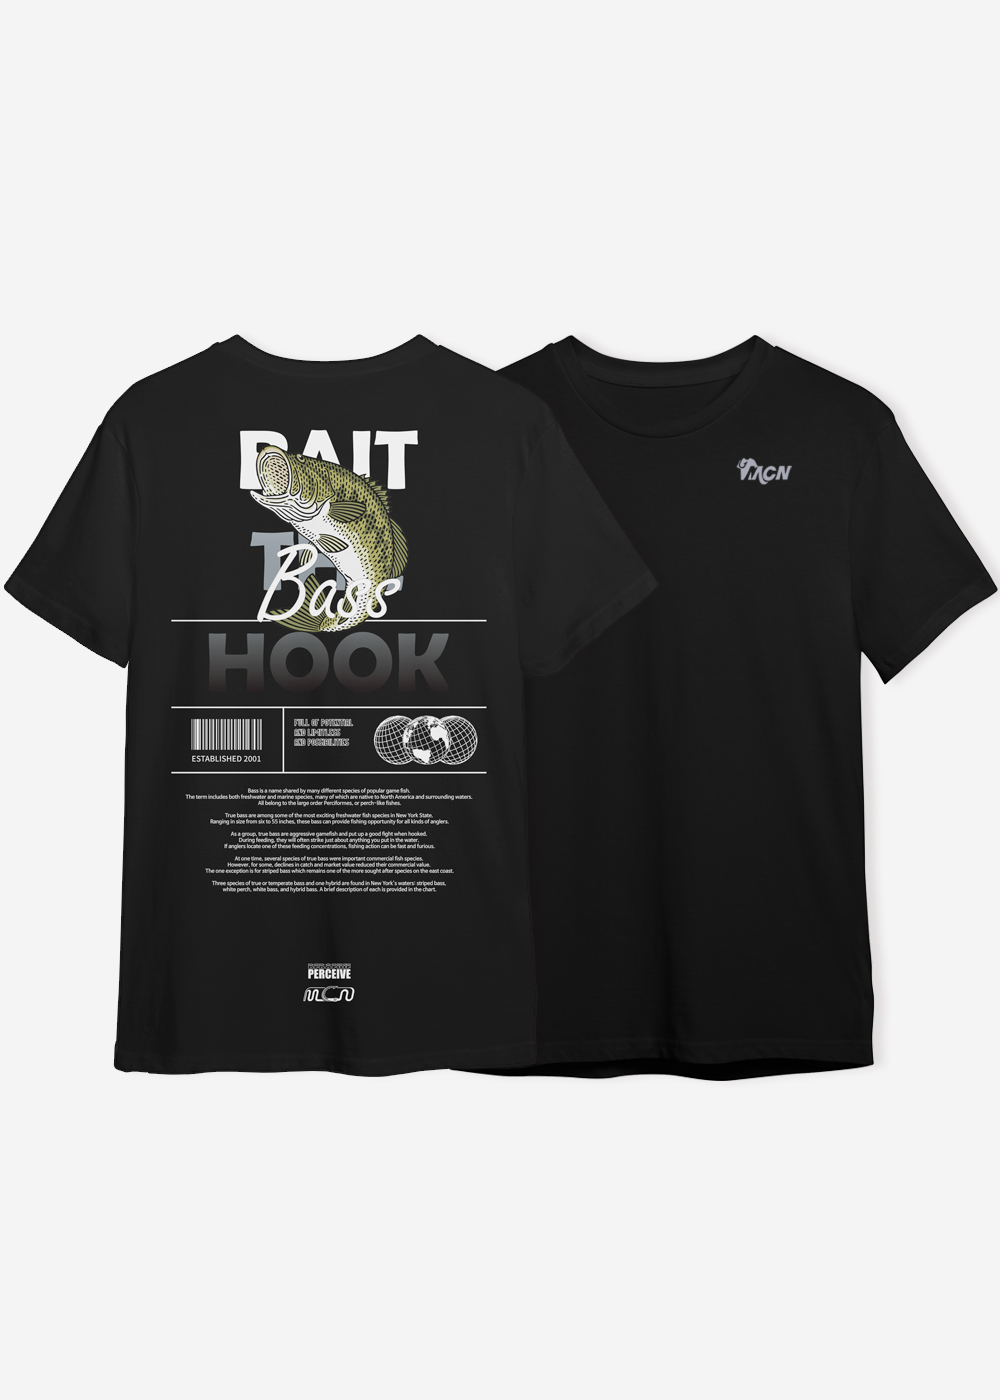 mcnfishing[MFTS-BASS] 배스 경량 스판 기능성 반팔 티셔츠 (화이트, 블랙)